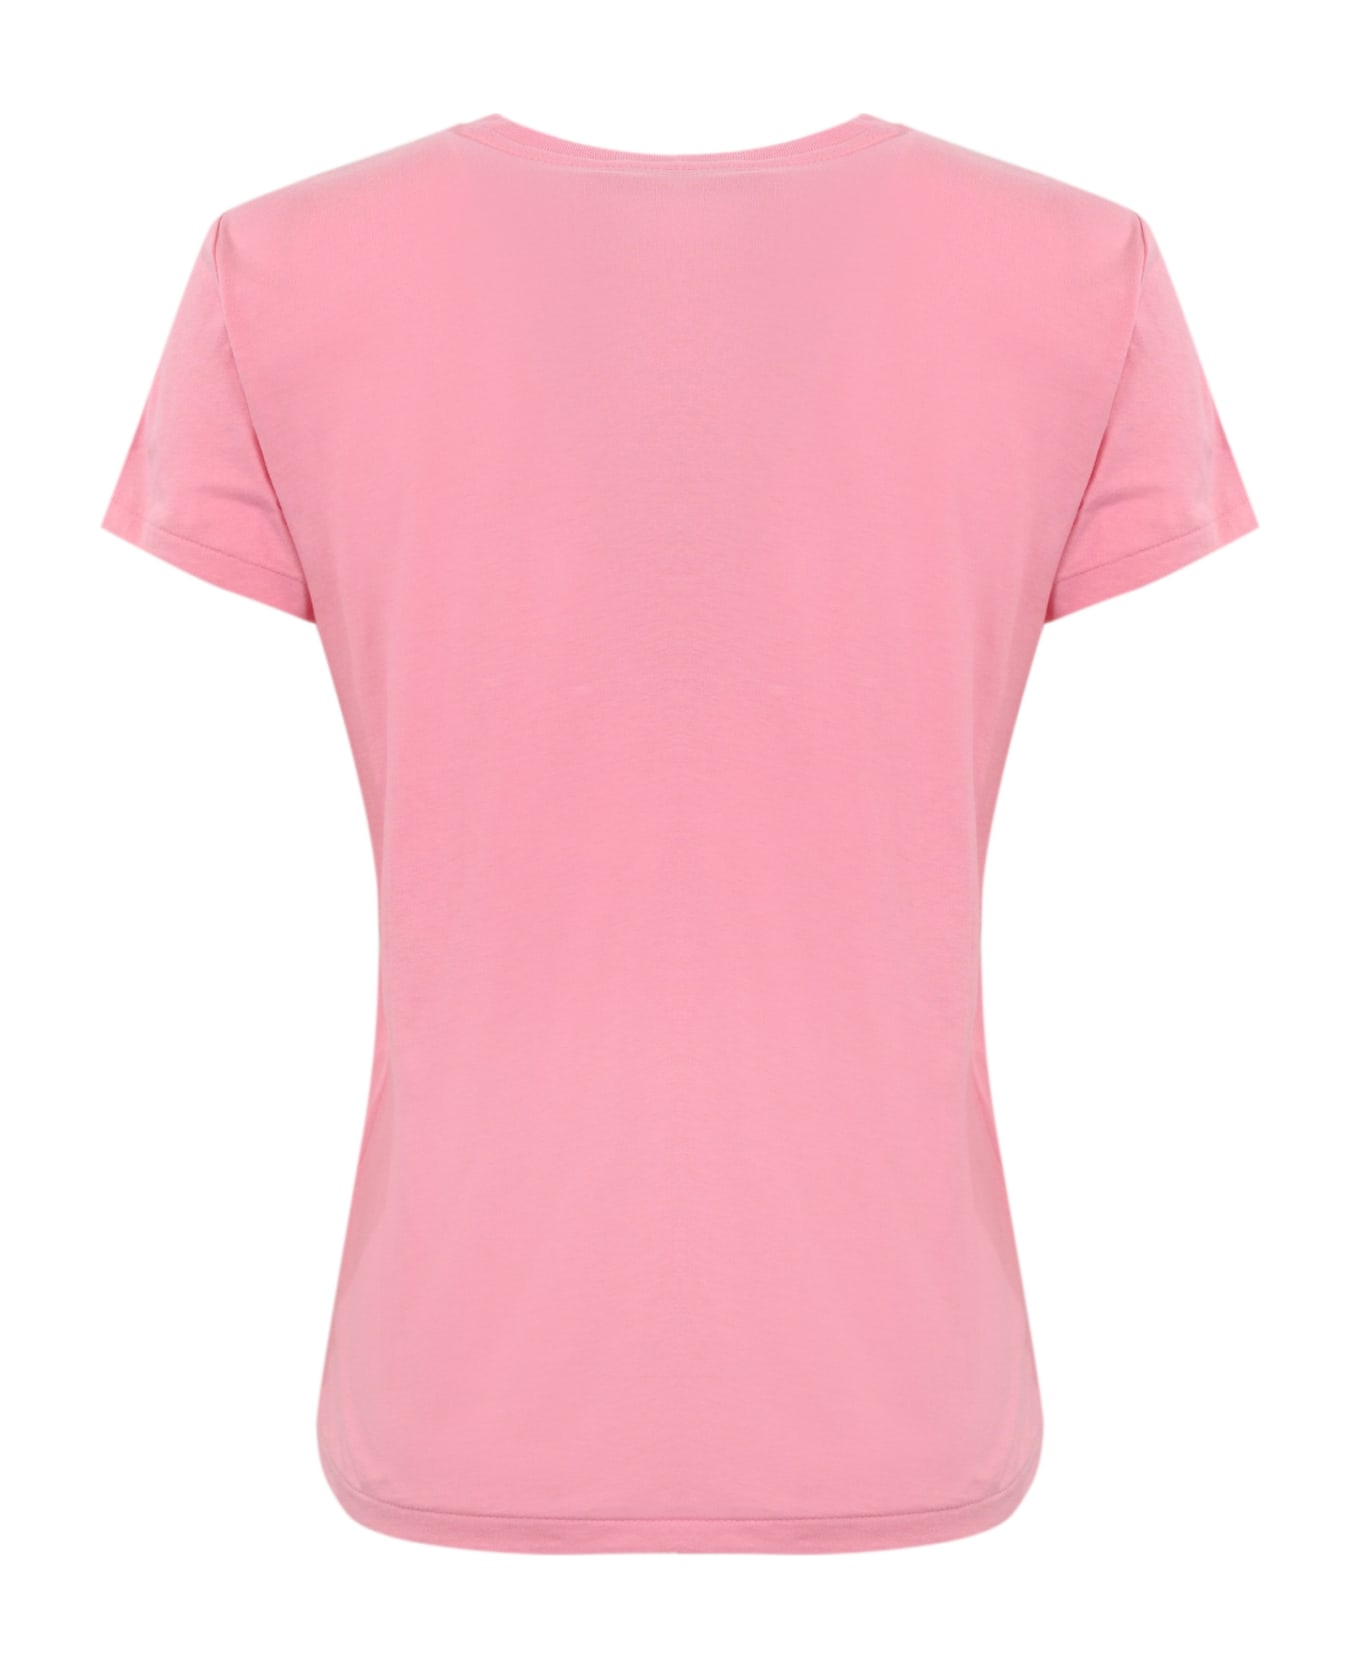 Polo Ralph Lauren Cotton Pony Logo T-shirt - Pink